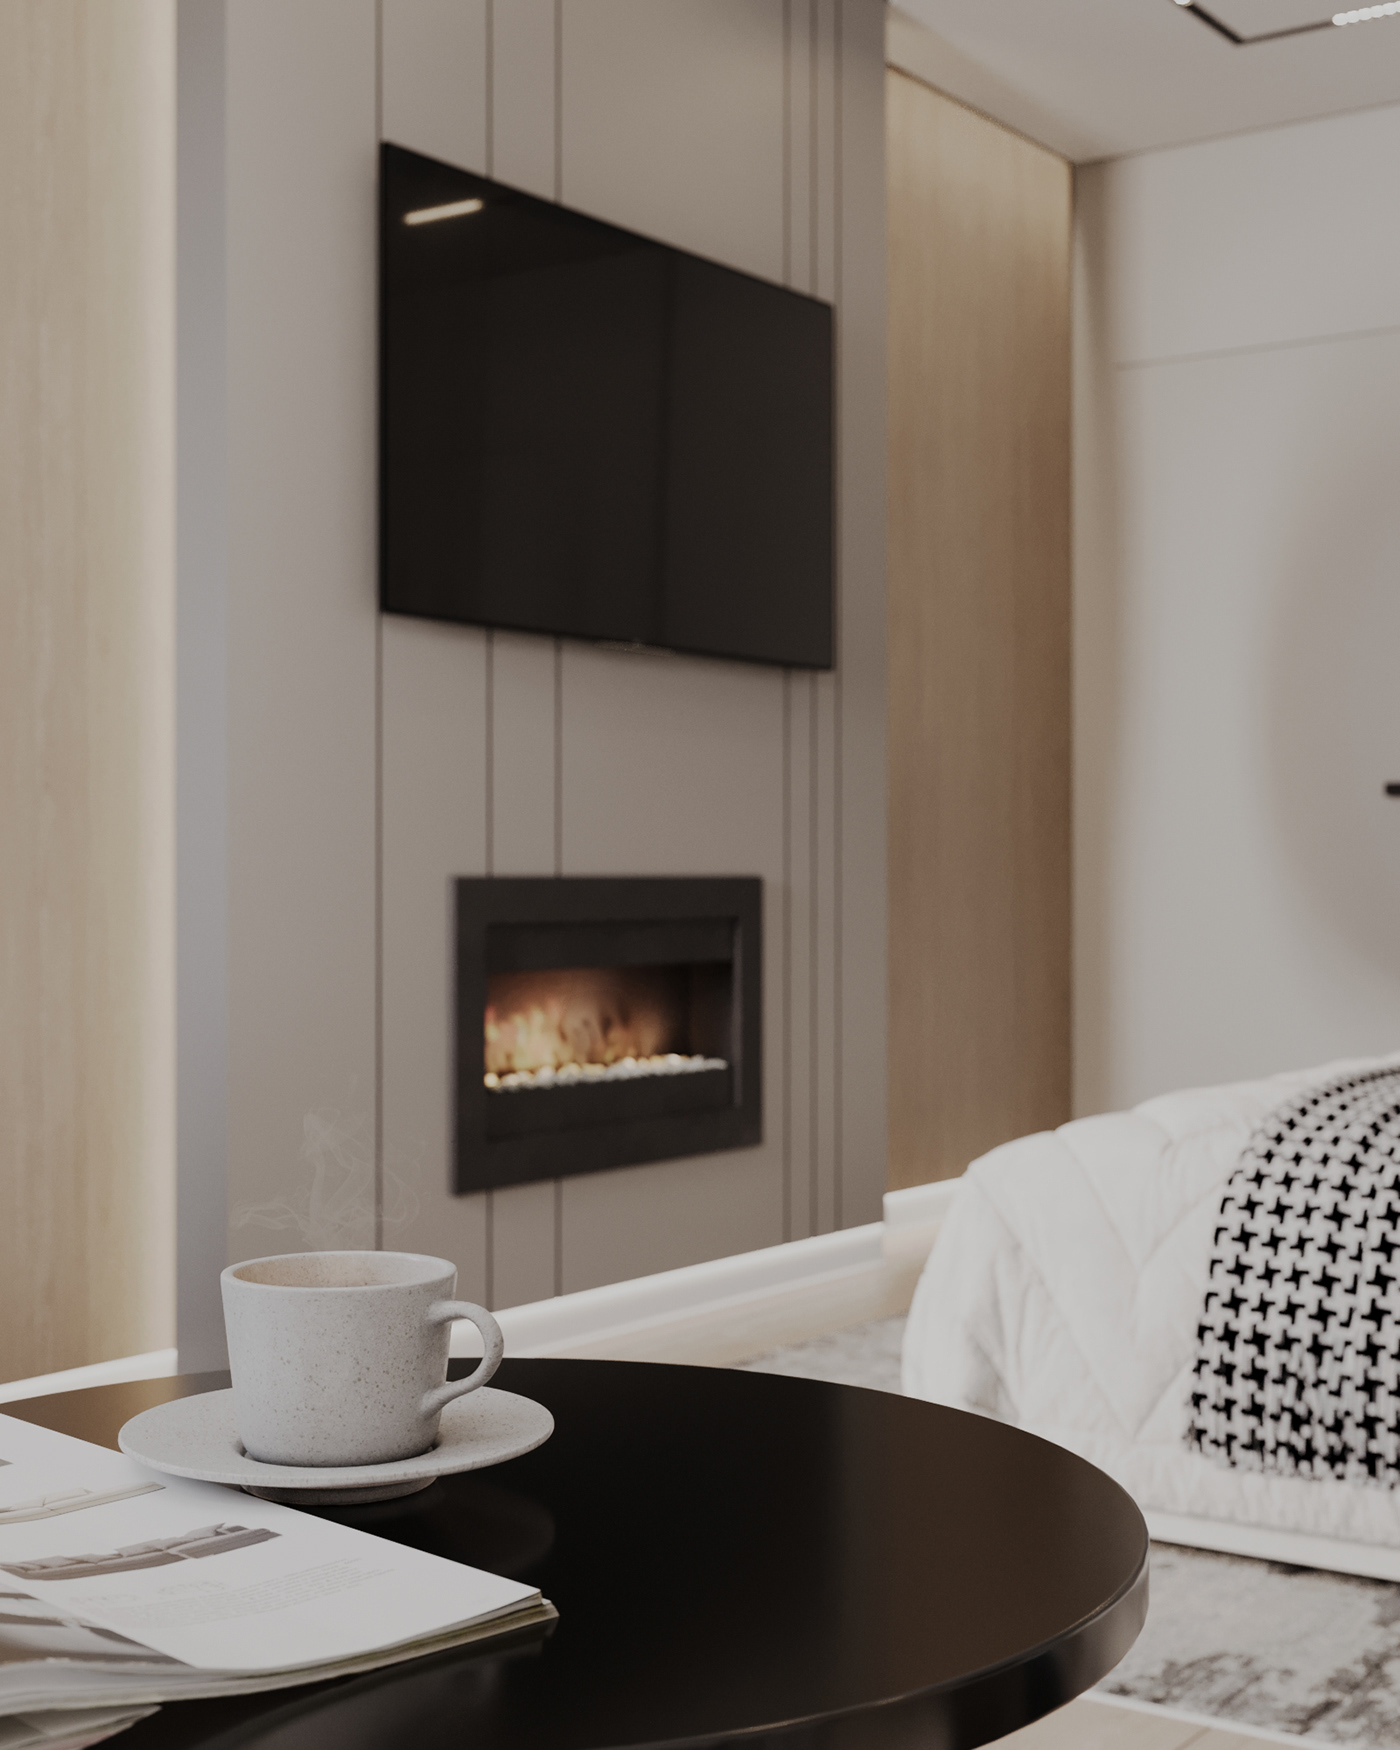 bedroom interior design  visualization 3ds max 3D 3d modeling Render corona render  archviz corona